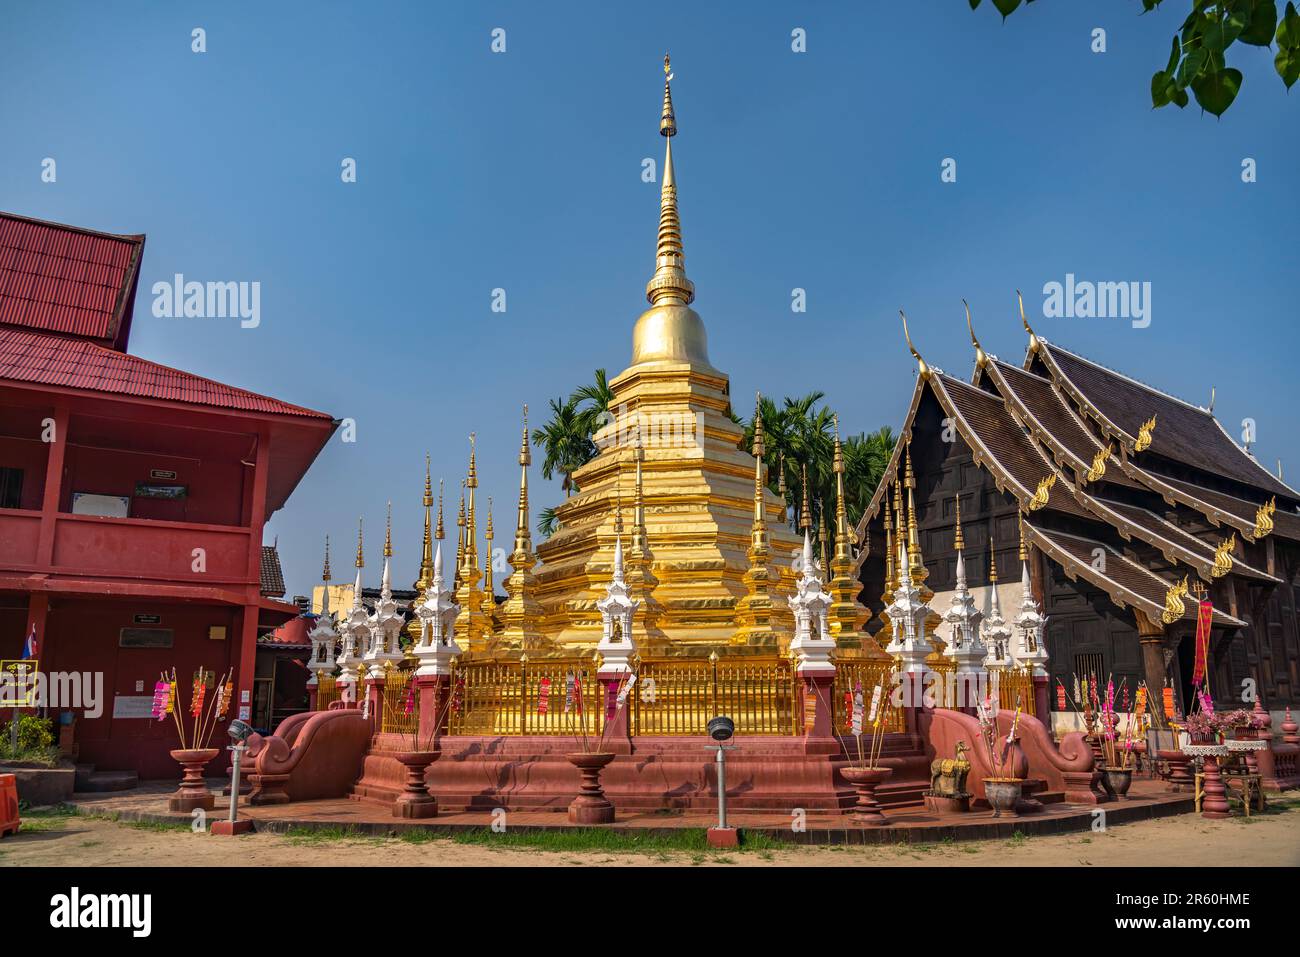 Goldener Stupa des Wat Phantao, Chiang Mai, Thailand, Asien   |   Golden stupa of Wat Phantao, Chiang Mai, Thailand, Asia Stock Photo